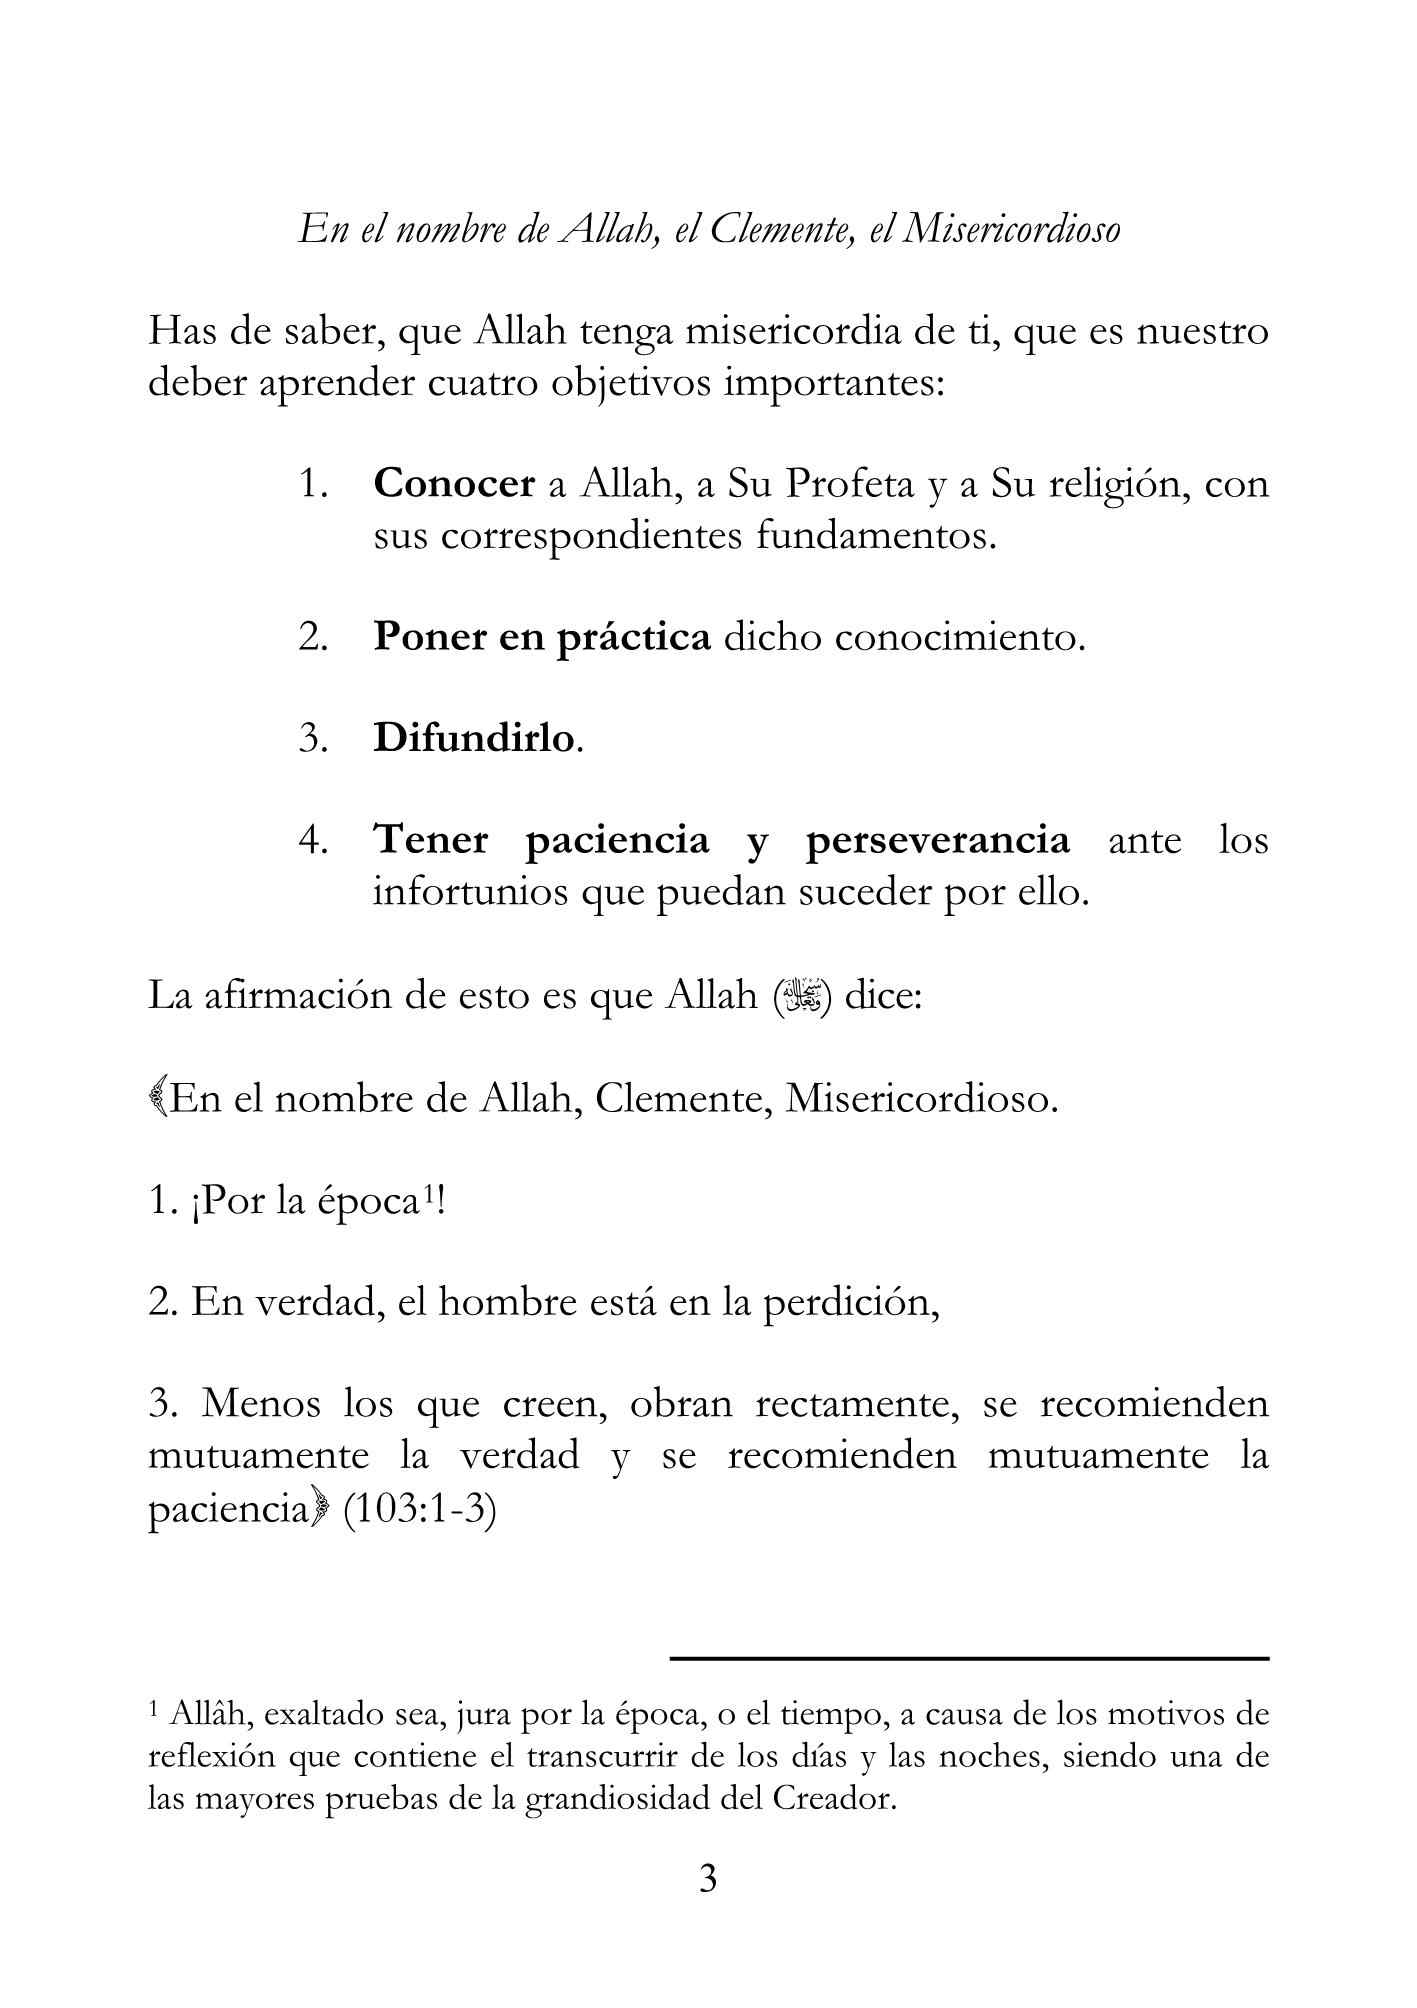 إسباني - ثلاثة الأصول وأدلتها - Tres principios y sus fundamentos.pdf, 40-Sayfa 